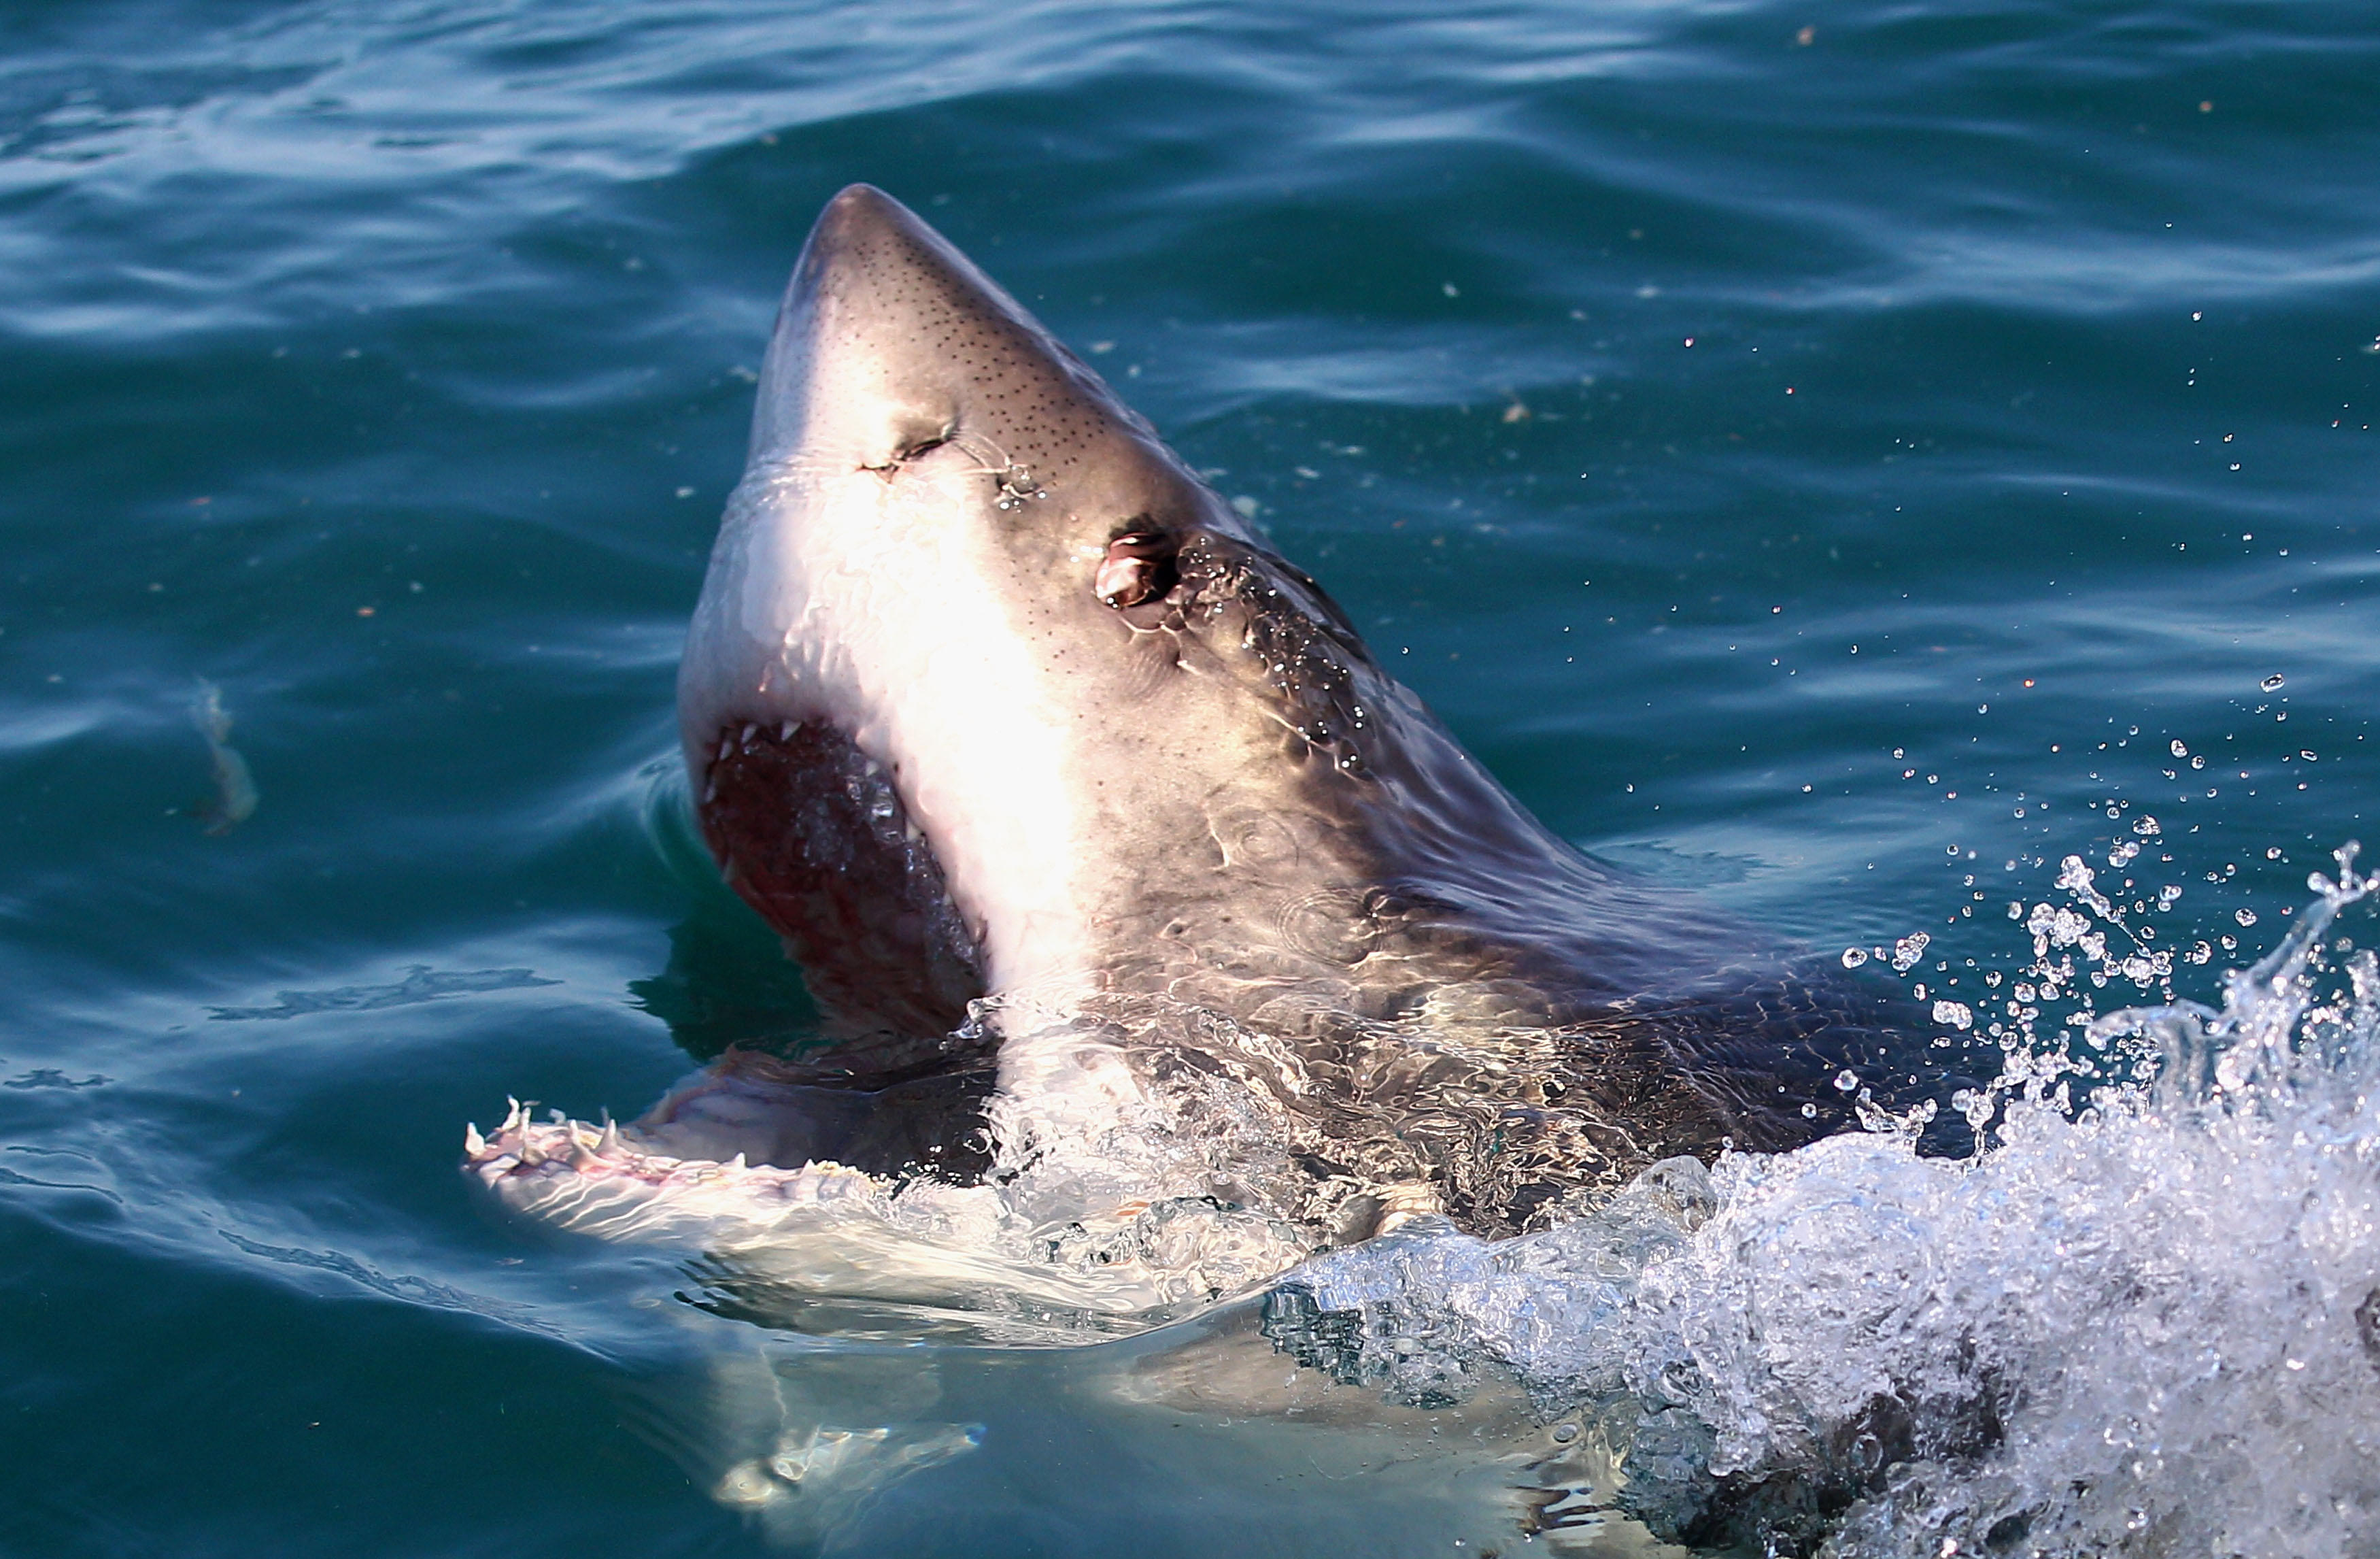 Great white shark caught on video near San Francisco surfers - CBS News